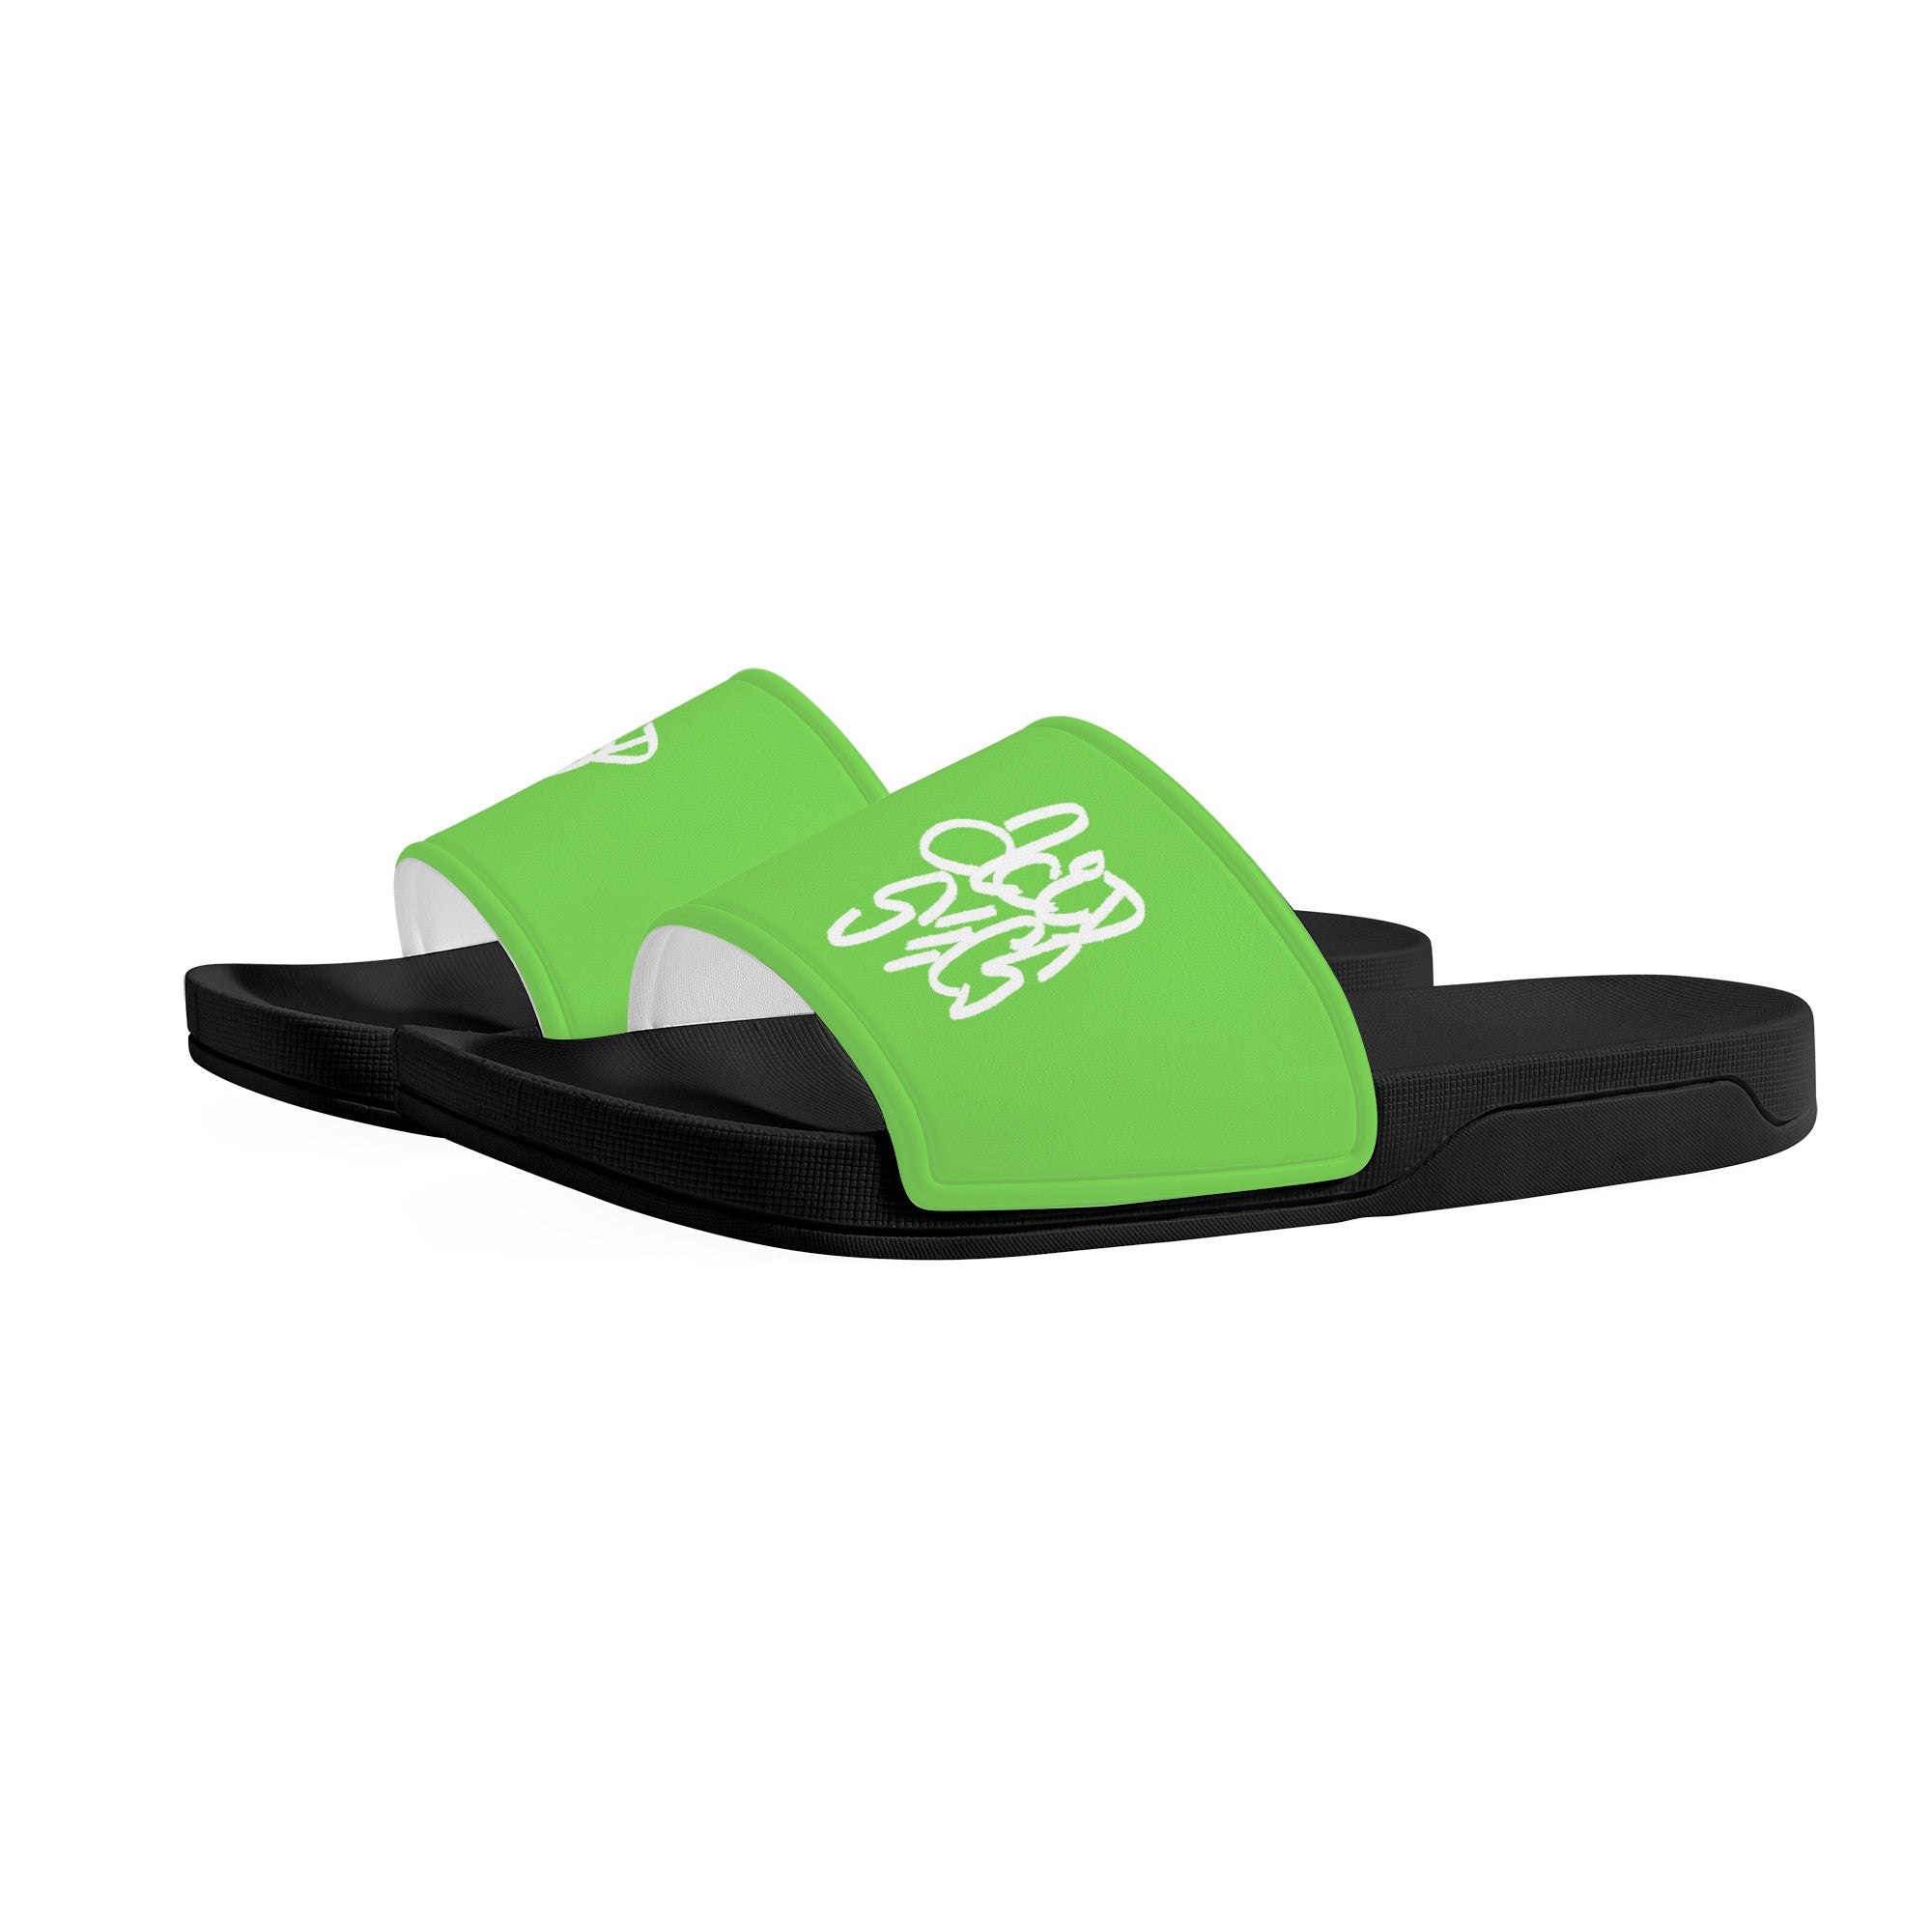 Acid Secs Slide Sandals - Lime Green